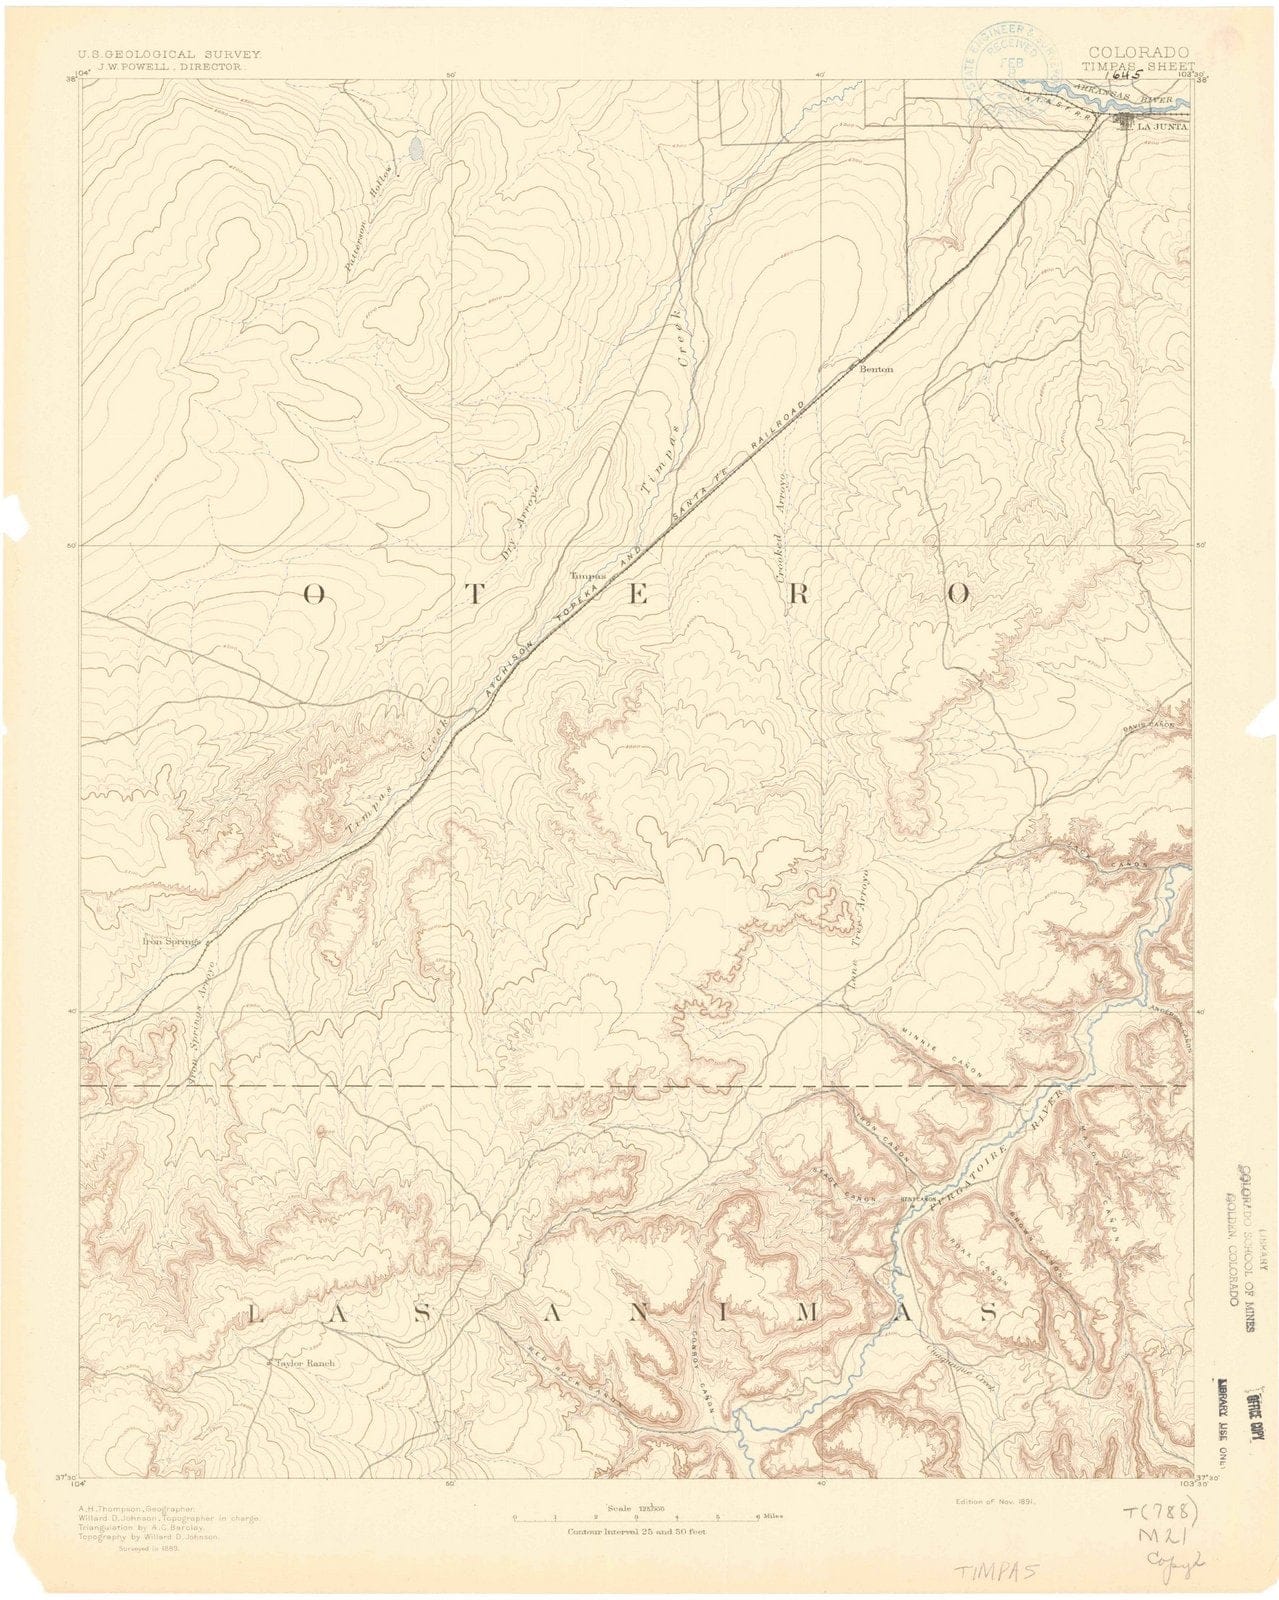 1891 Timpas, CO - Colorado - USGS Topographic Map